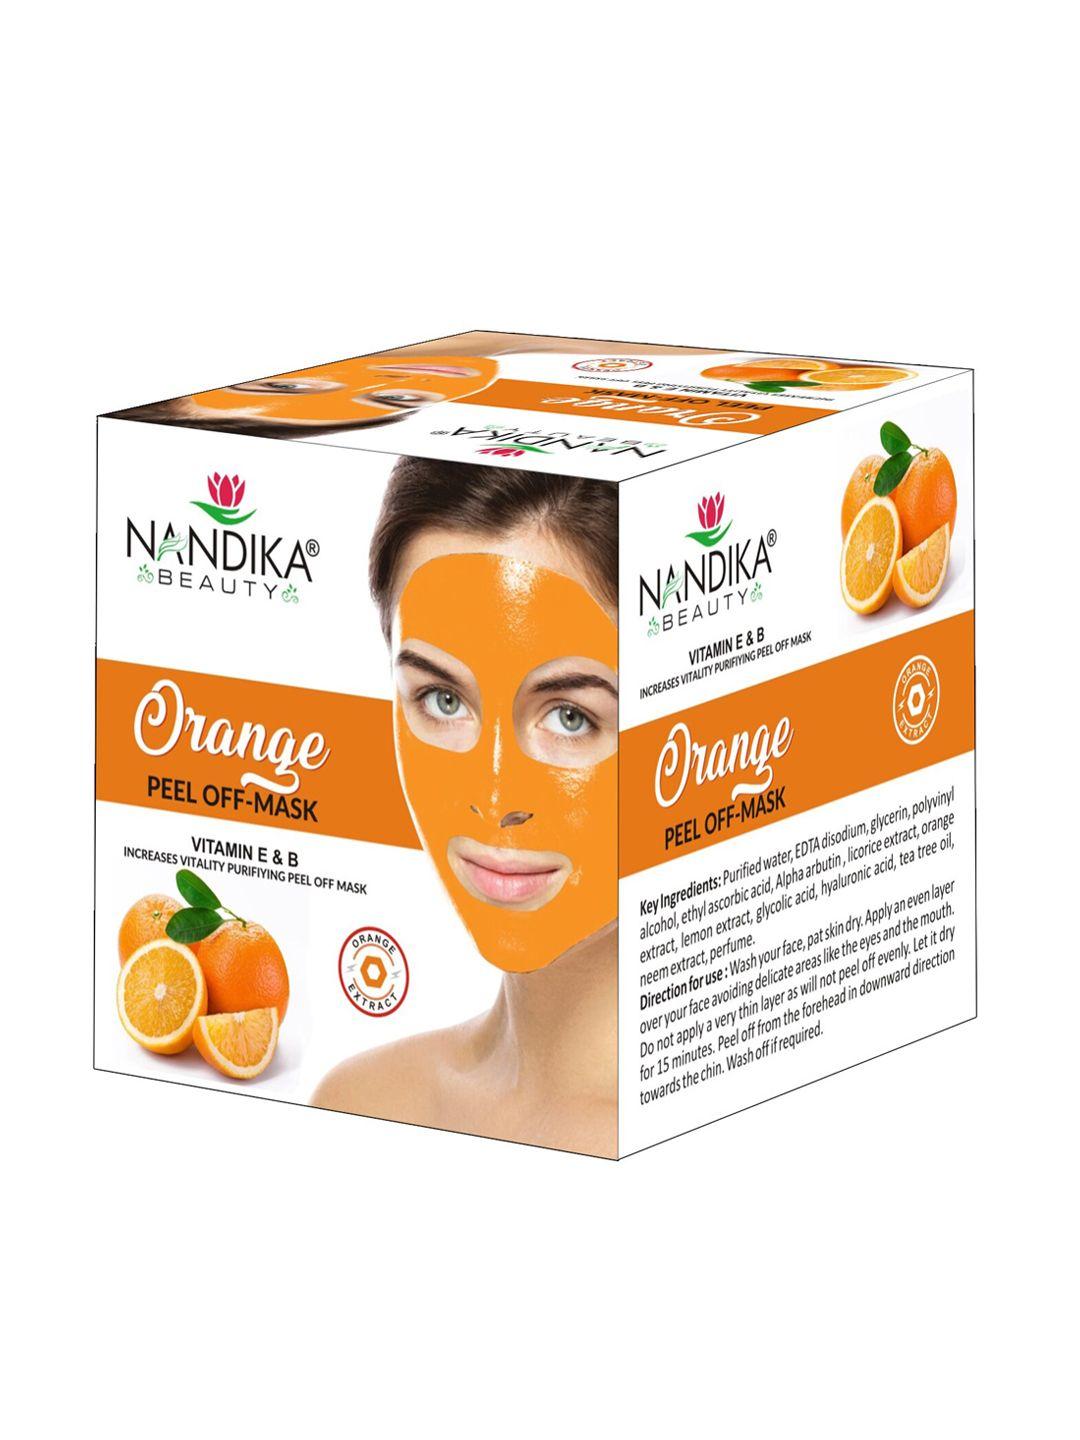 nandika beauty orange peel off-mask with vitamin e & b - 100g